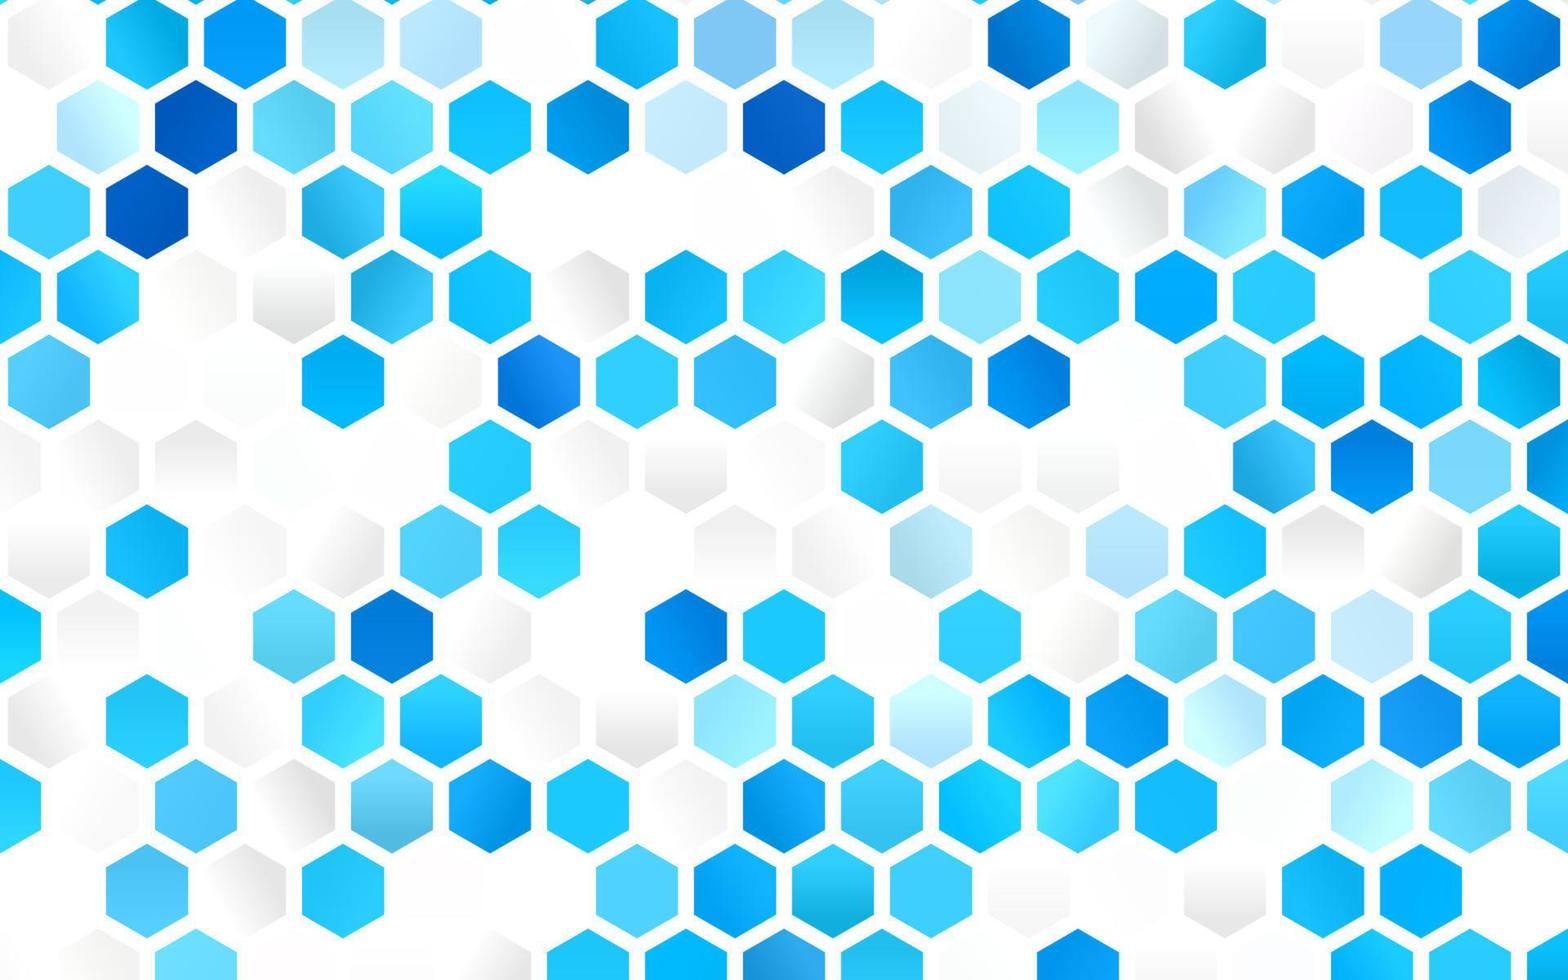 textura de vector azul claro con hexágonos de colores.